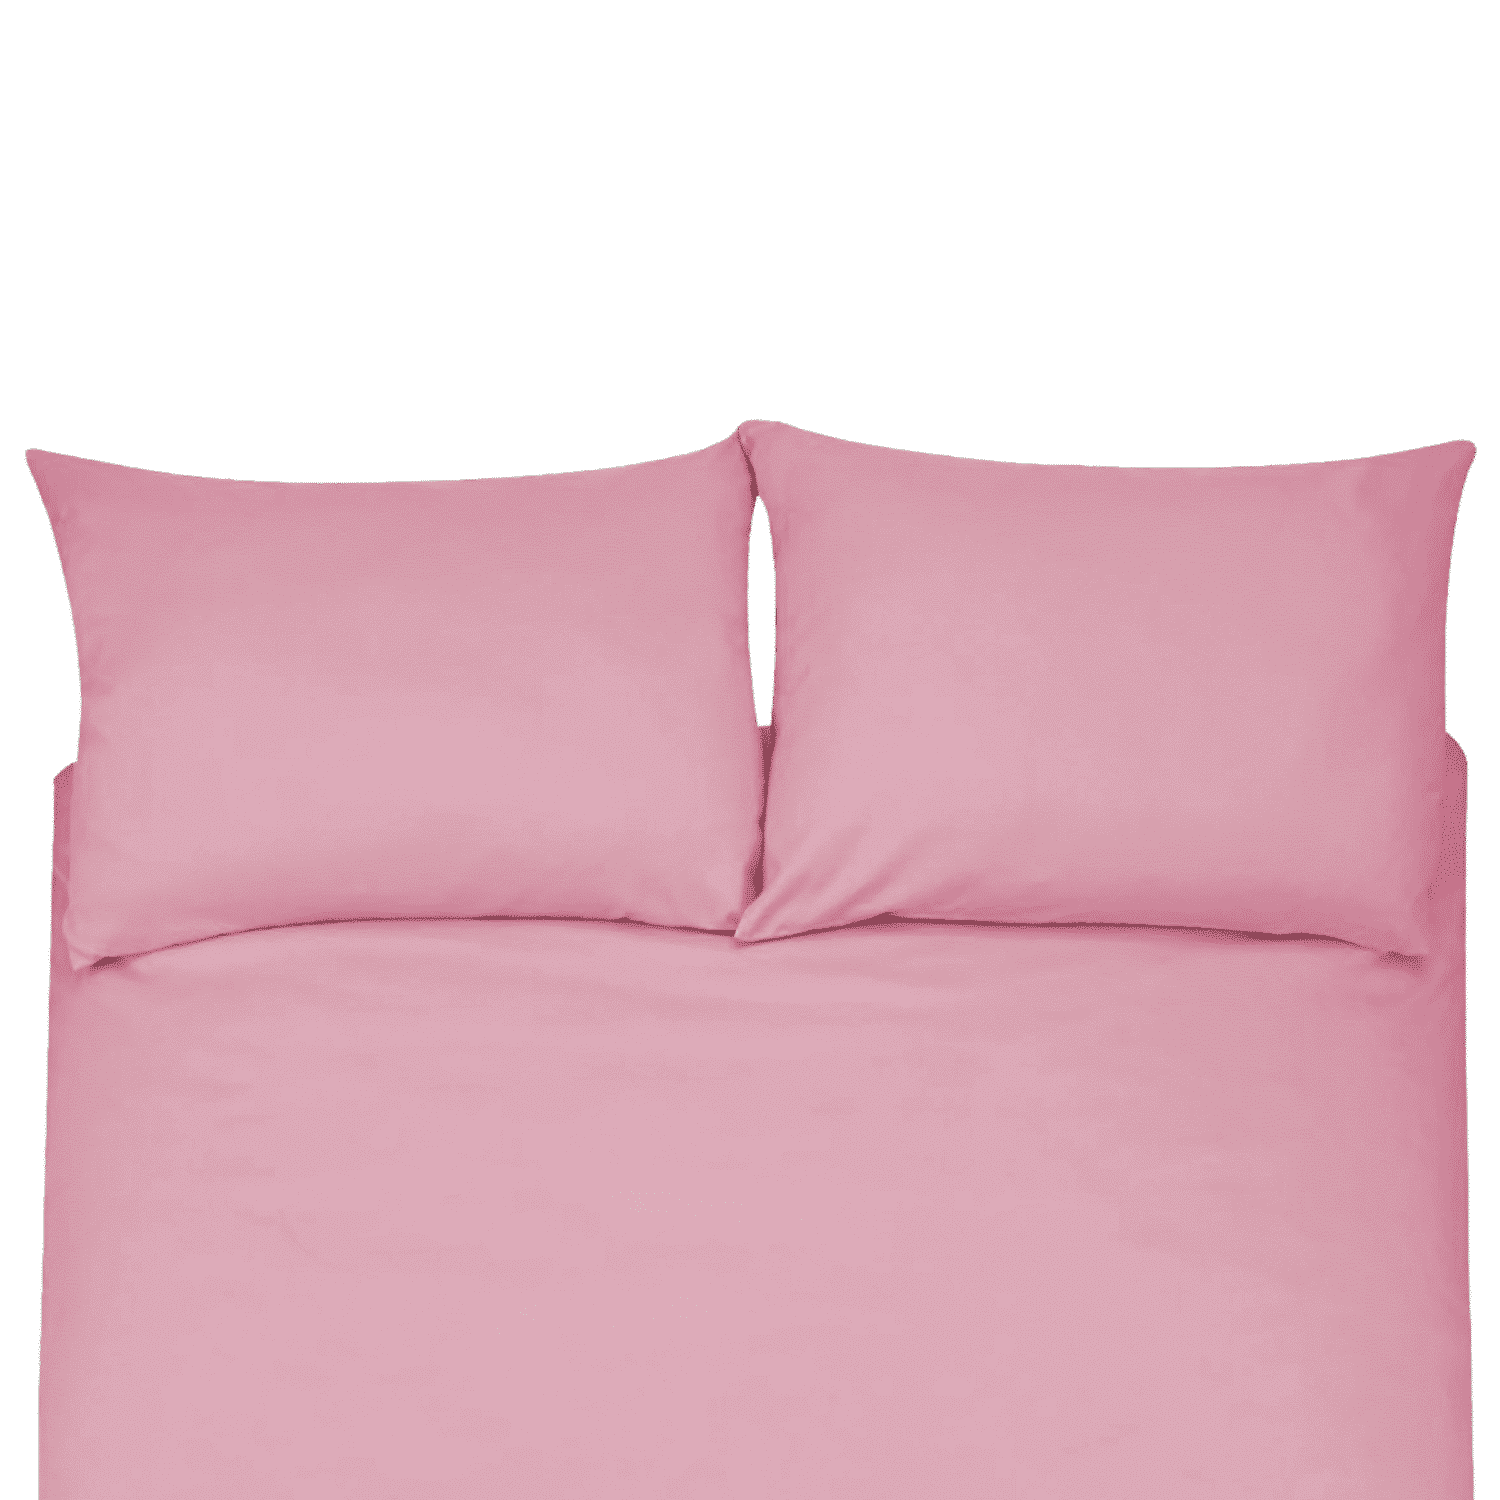 Completo-lenzuola-rosa-colors-100-fibra-naturale-cotone-120-gr-tinta-unita-1-piazza-½-francese-2-piazze-oekotex